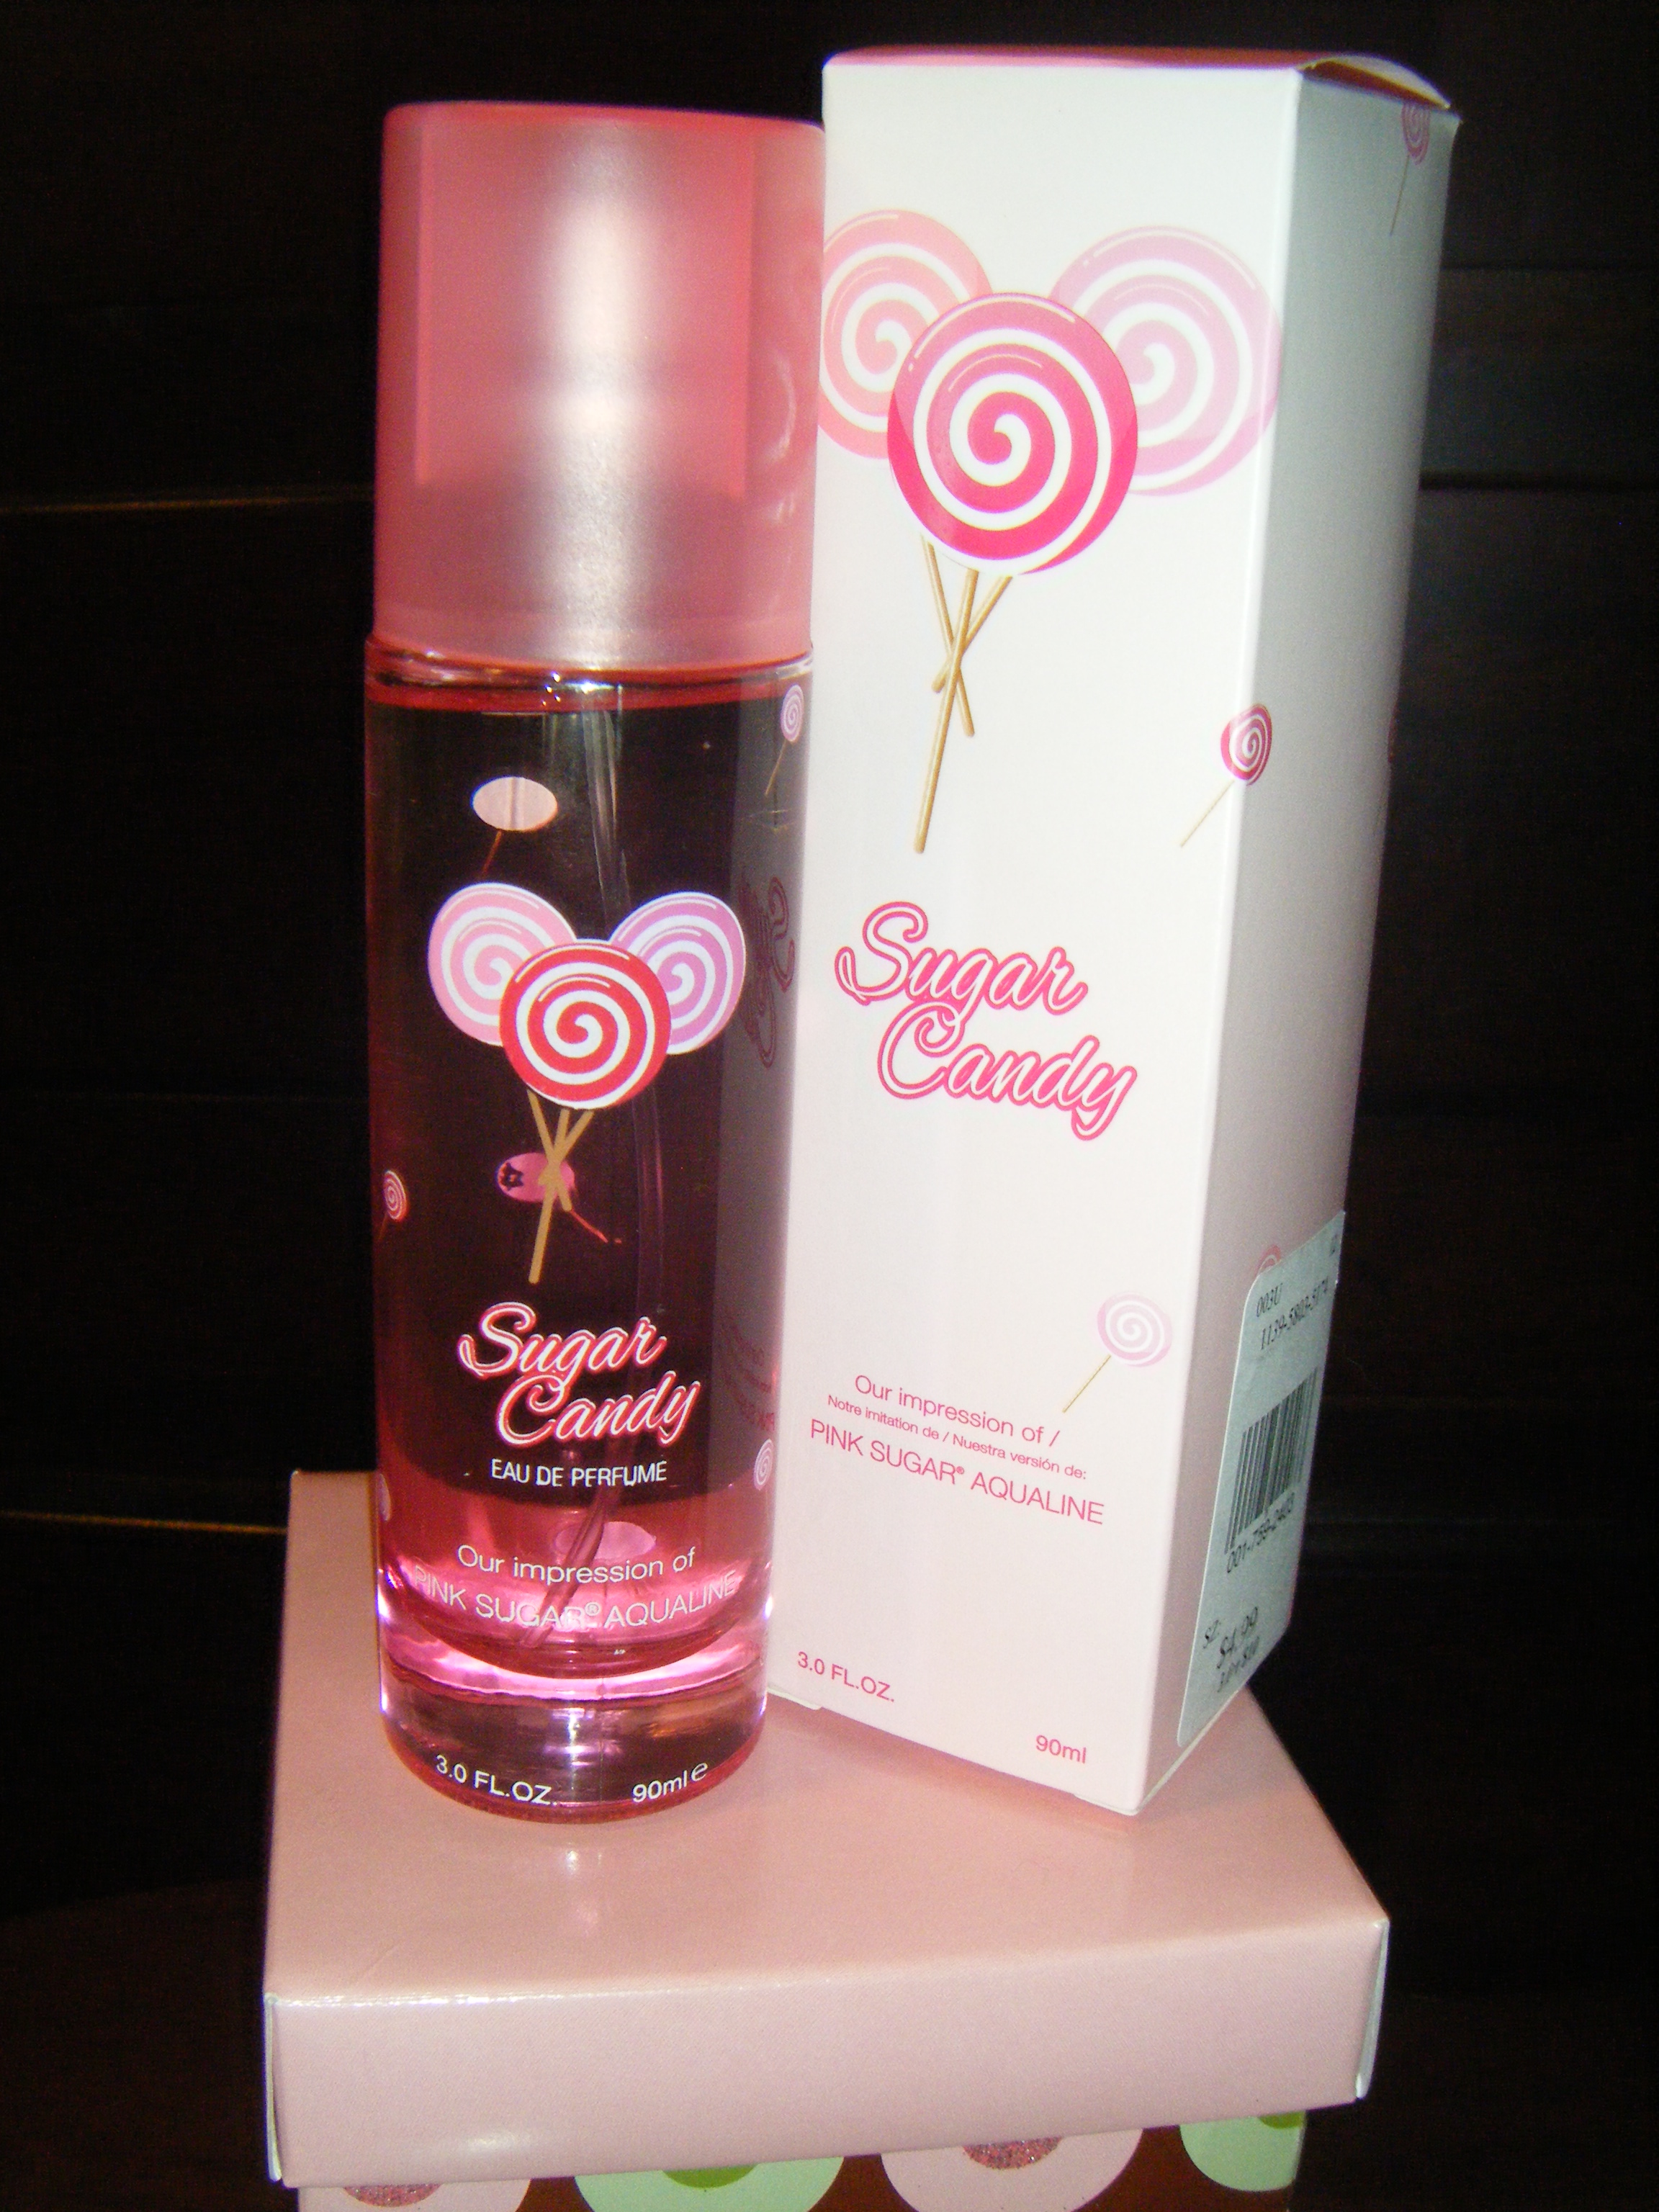 pink sugar cotton candy perfume